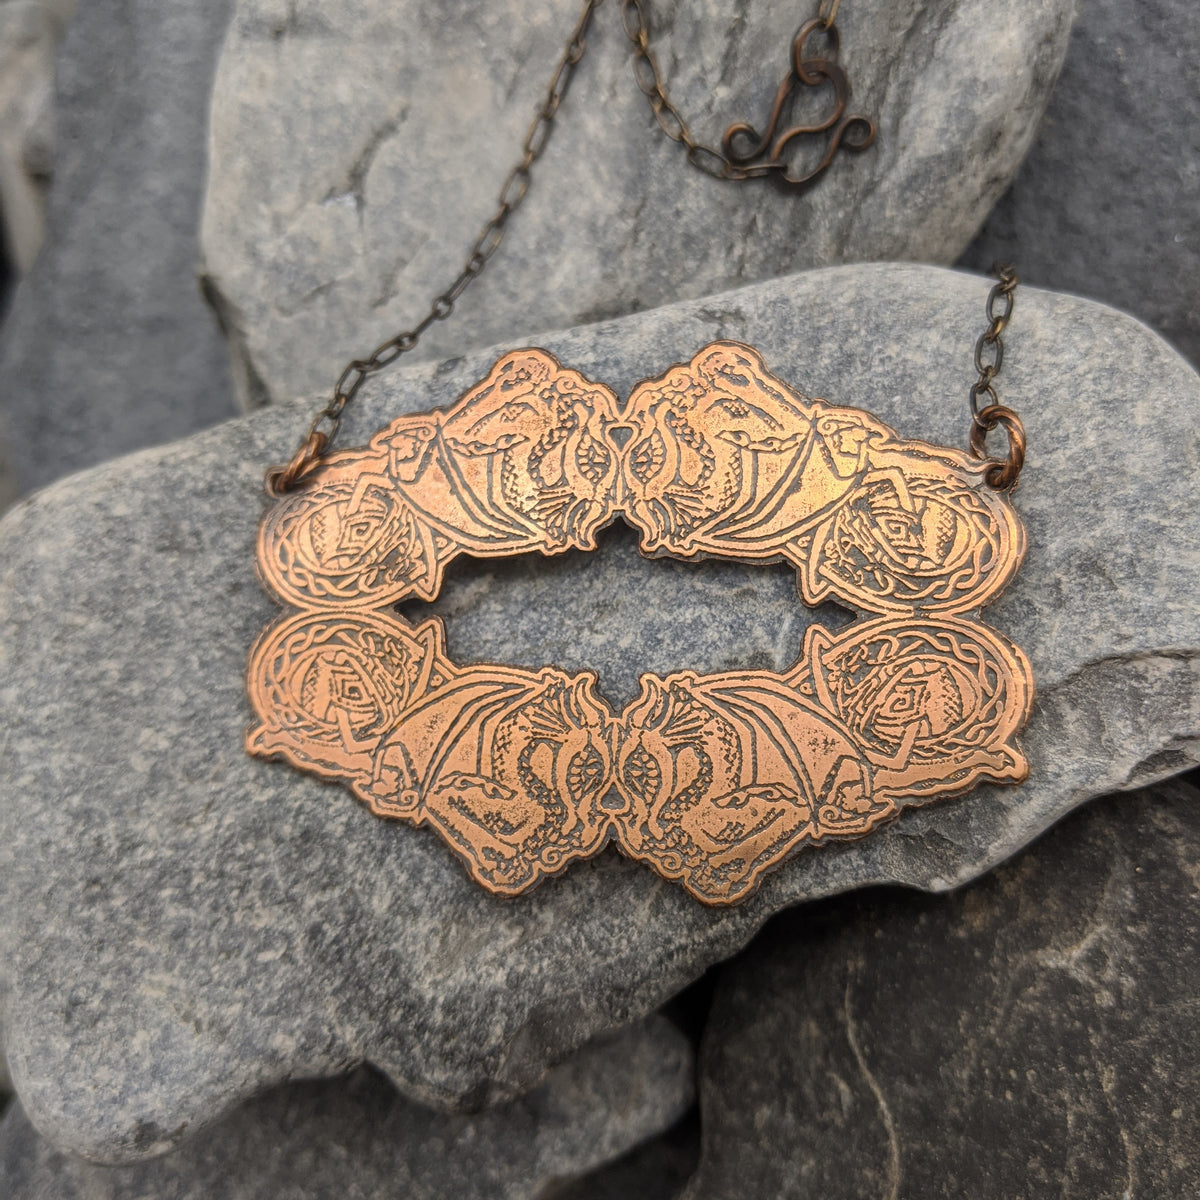 Handmade Dragon Pendant, Copper pendant hand cut into a four dragon design